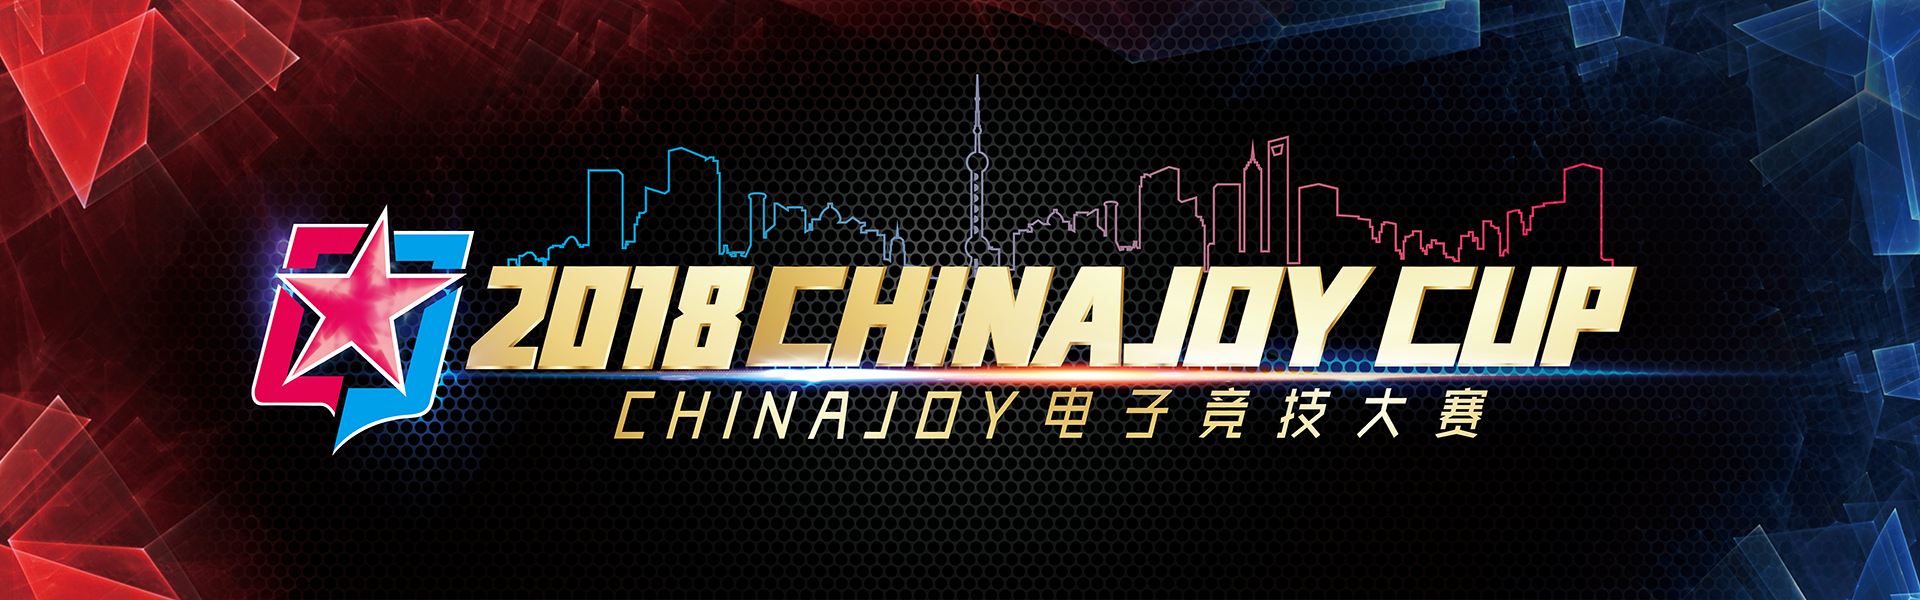 2018ChinaJoy电子竞技大赛火热开赛